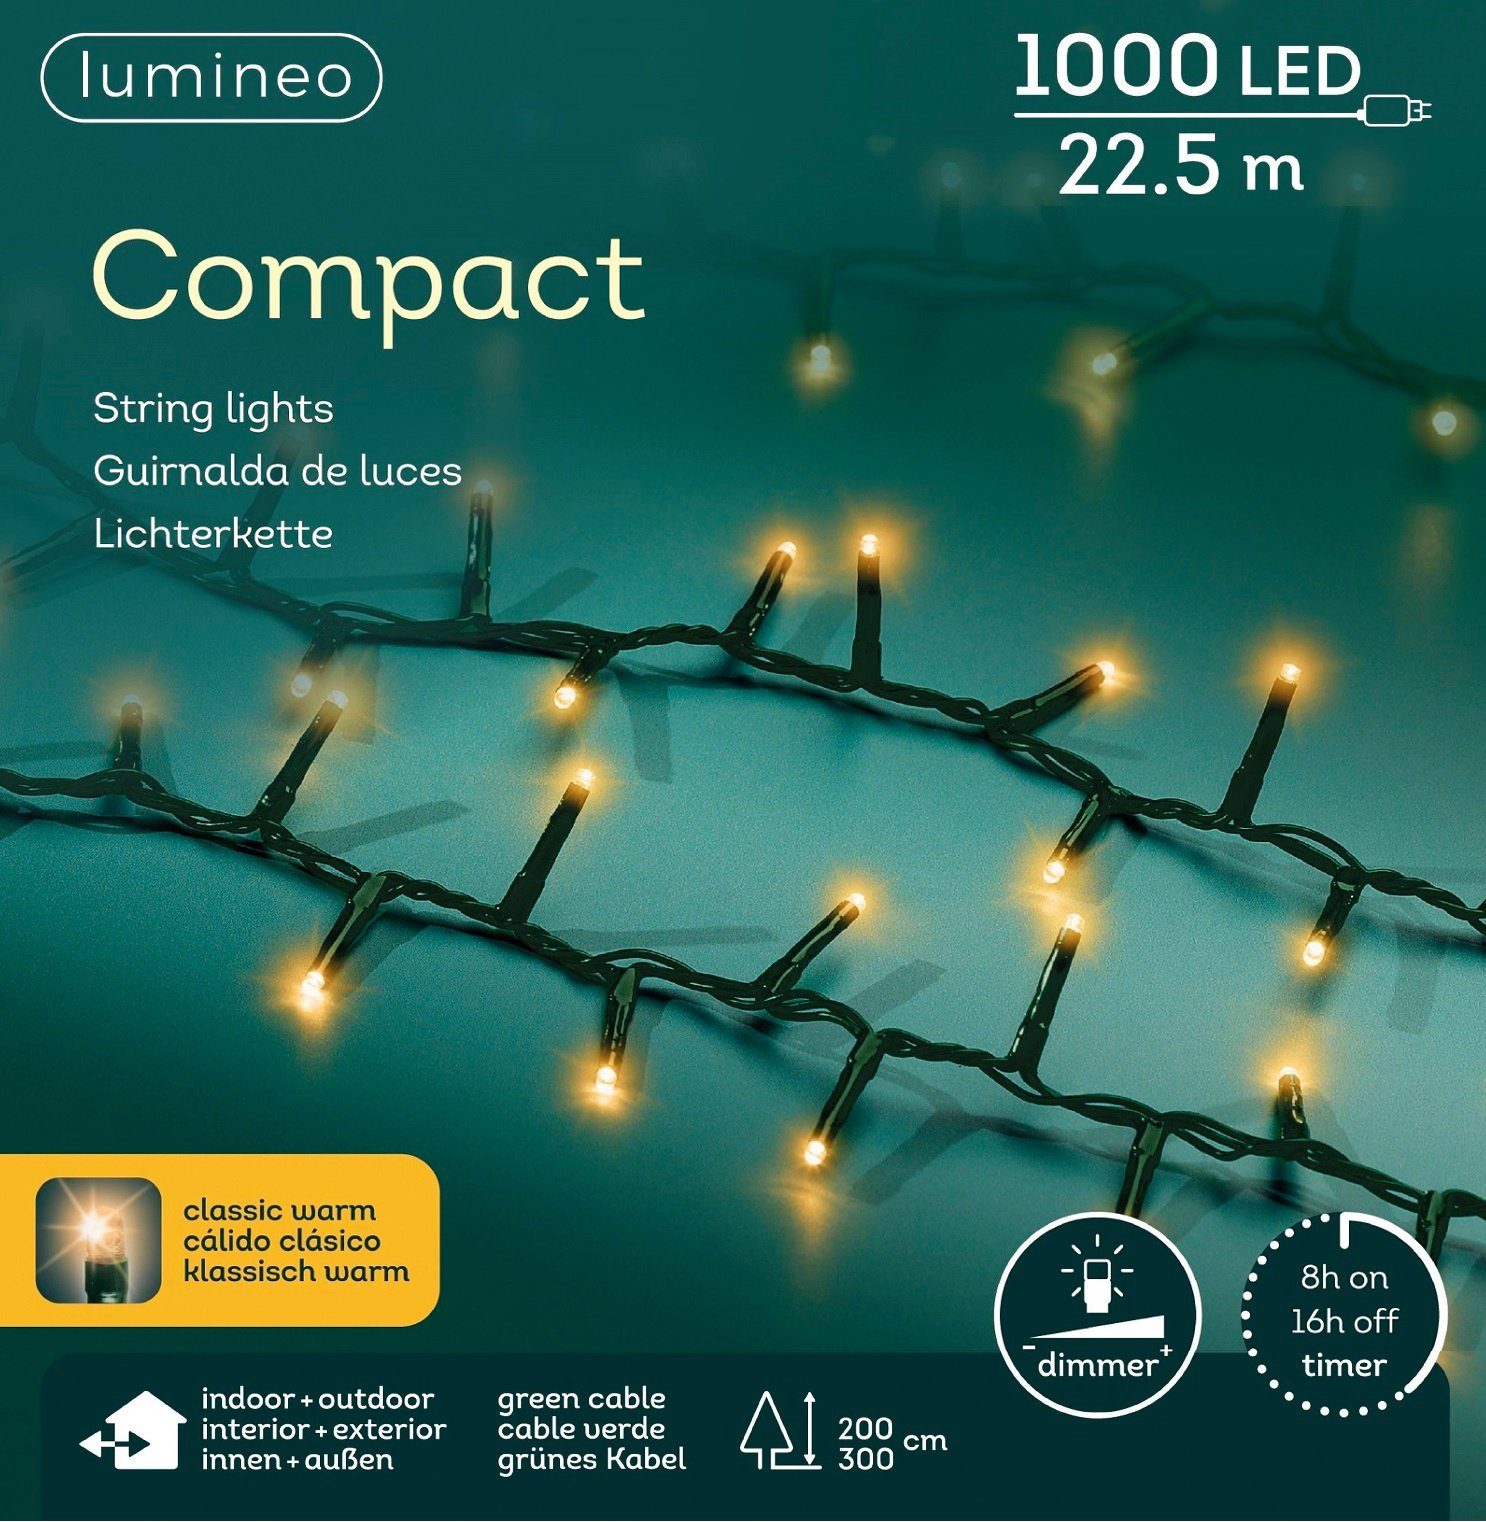 Lumineo LED-Lichterkette Lumineo Lichterkette Compact 1000 LED 22,5 m klassisch warm, Timer, Dimmbar, Timer, Indoor, Outdoor